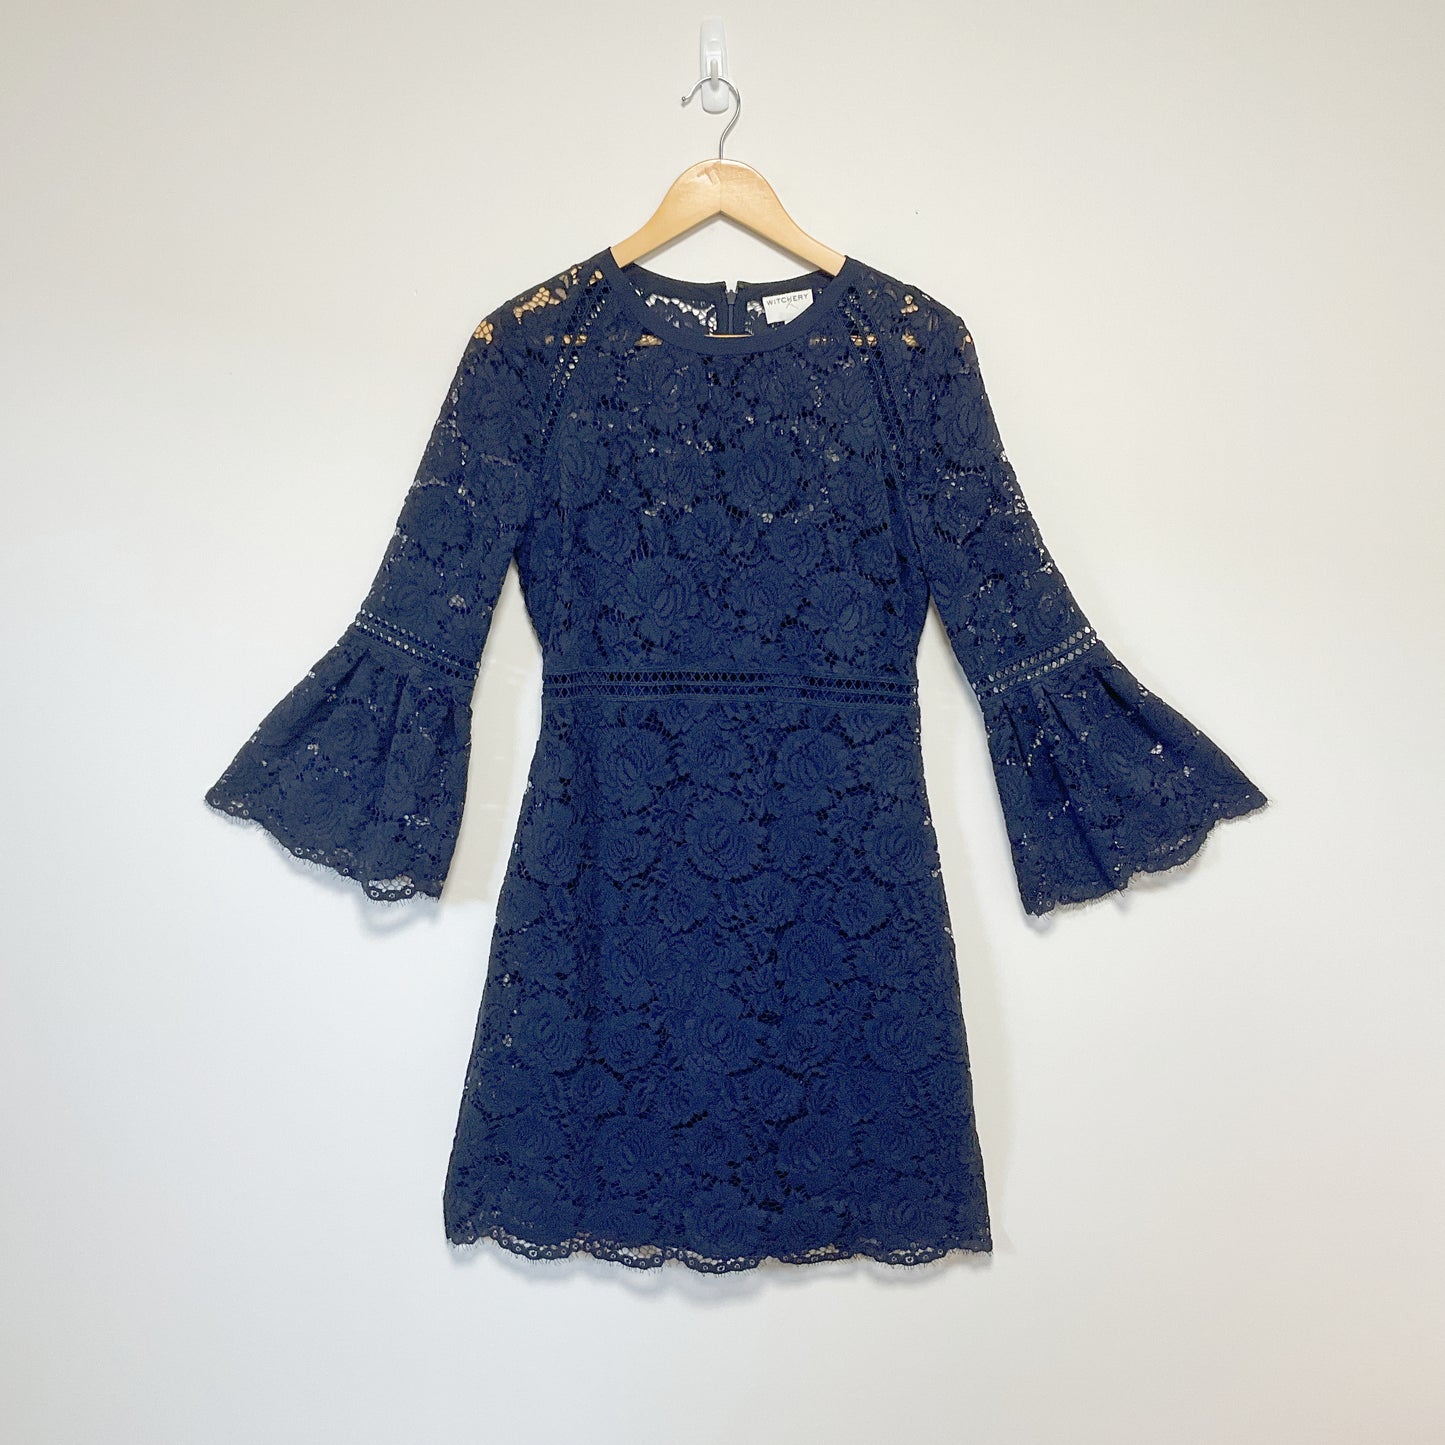 Witchery - Lace Dress - Size 10